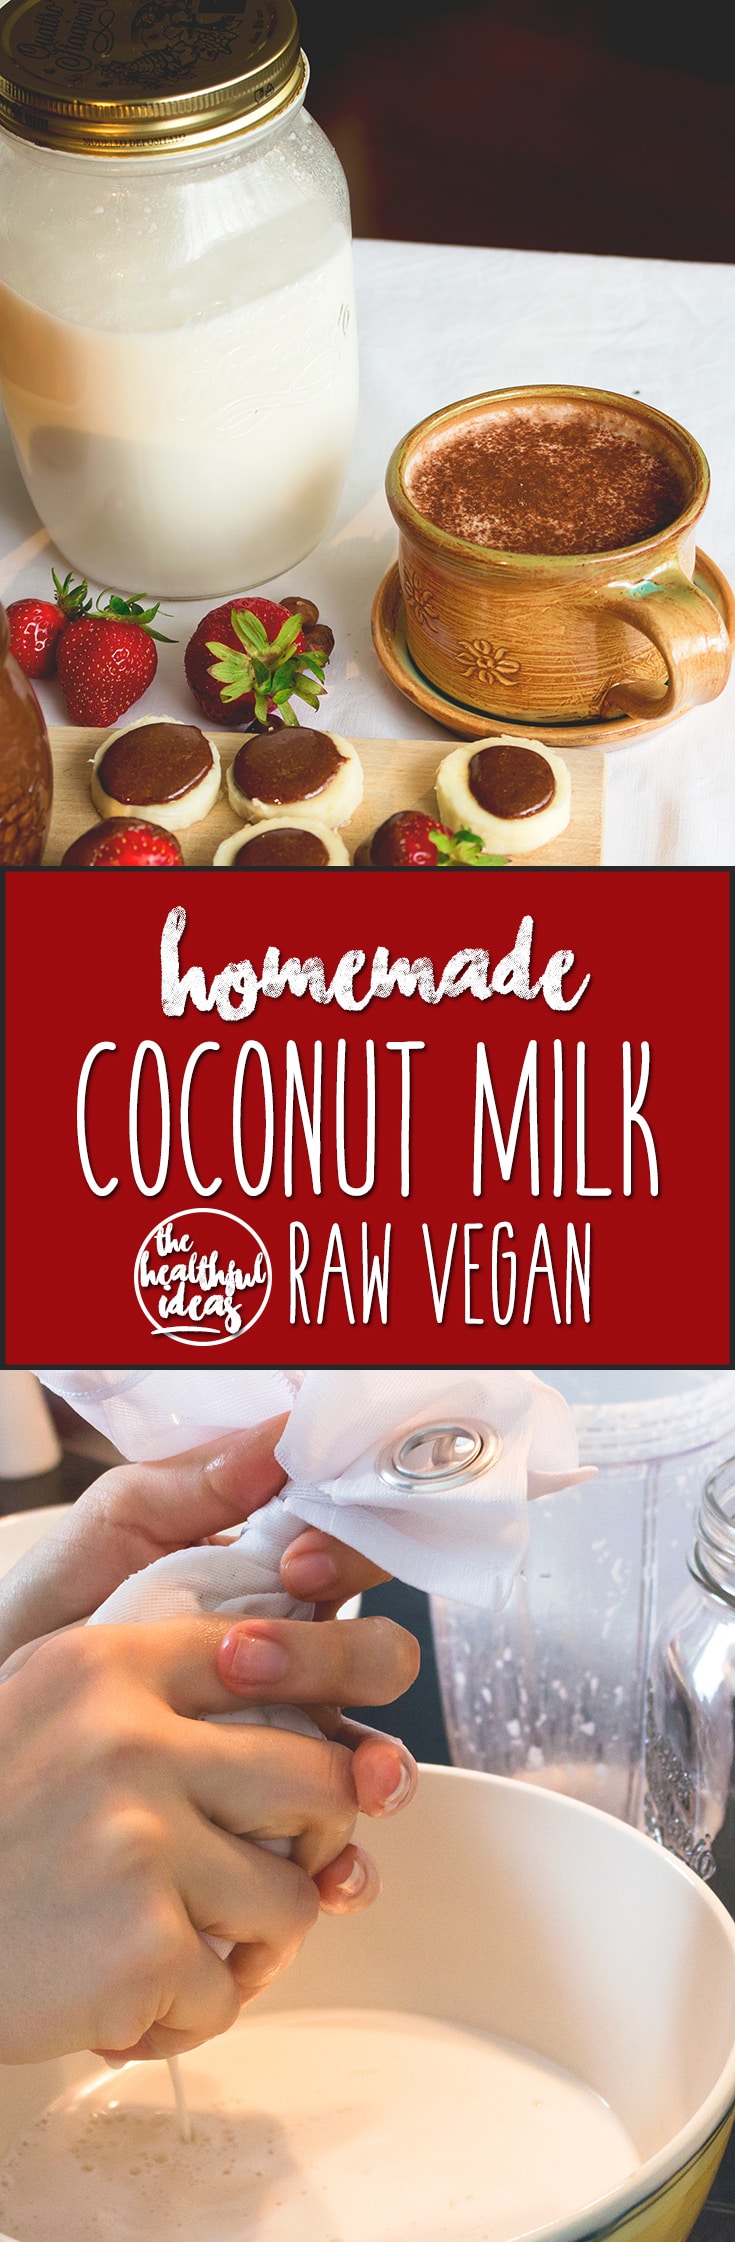 Coconut Milk - easy way to make homemade raw vegan coconut milk. Only 2 ingredients! I love this recipe, coconut milk is my favorite plant milk. | thehealthfulideas.com